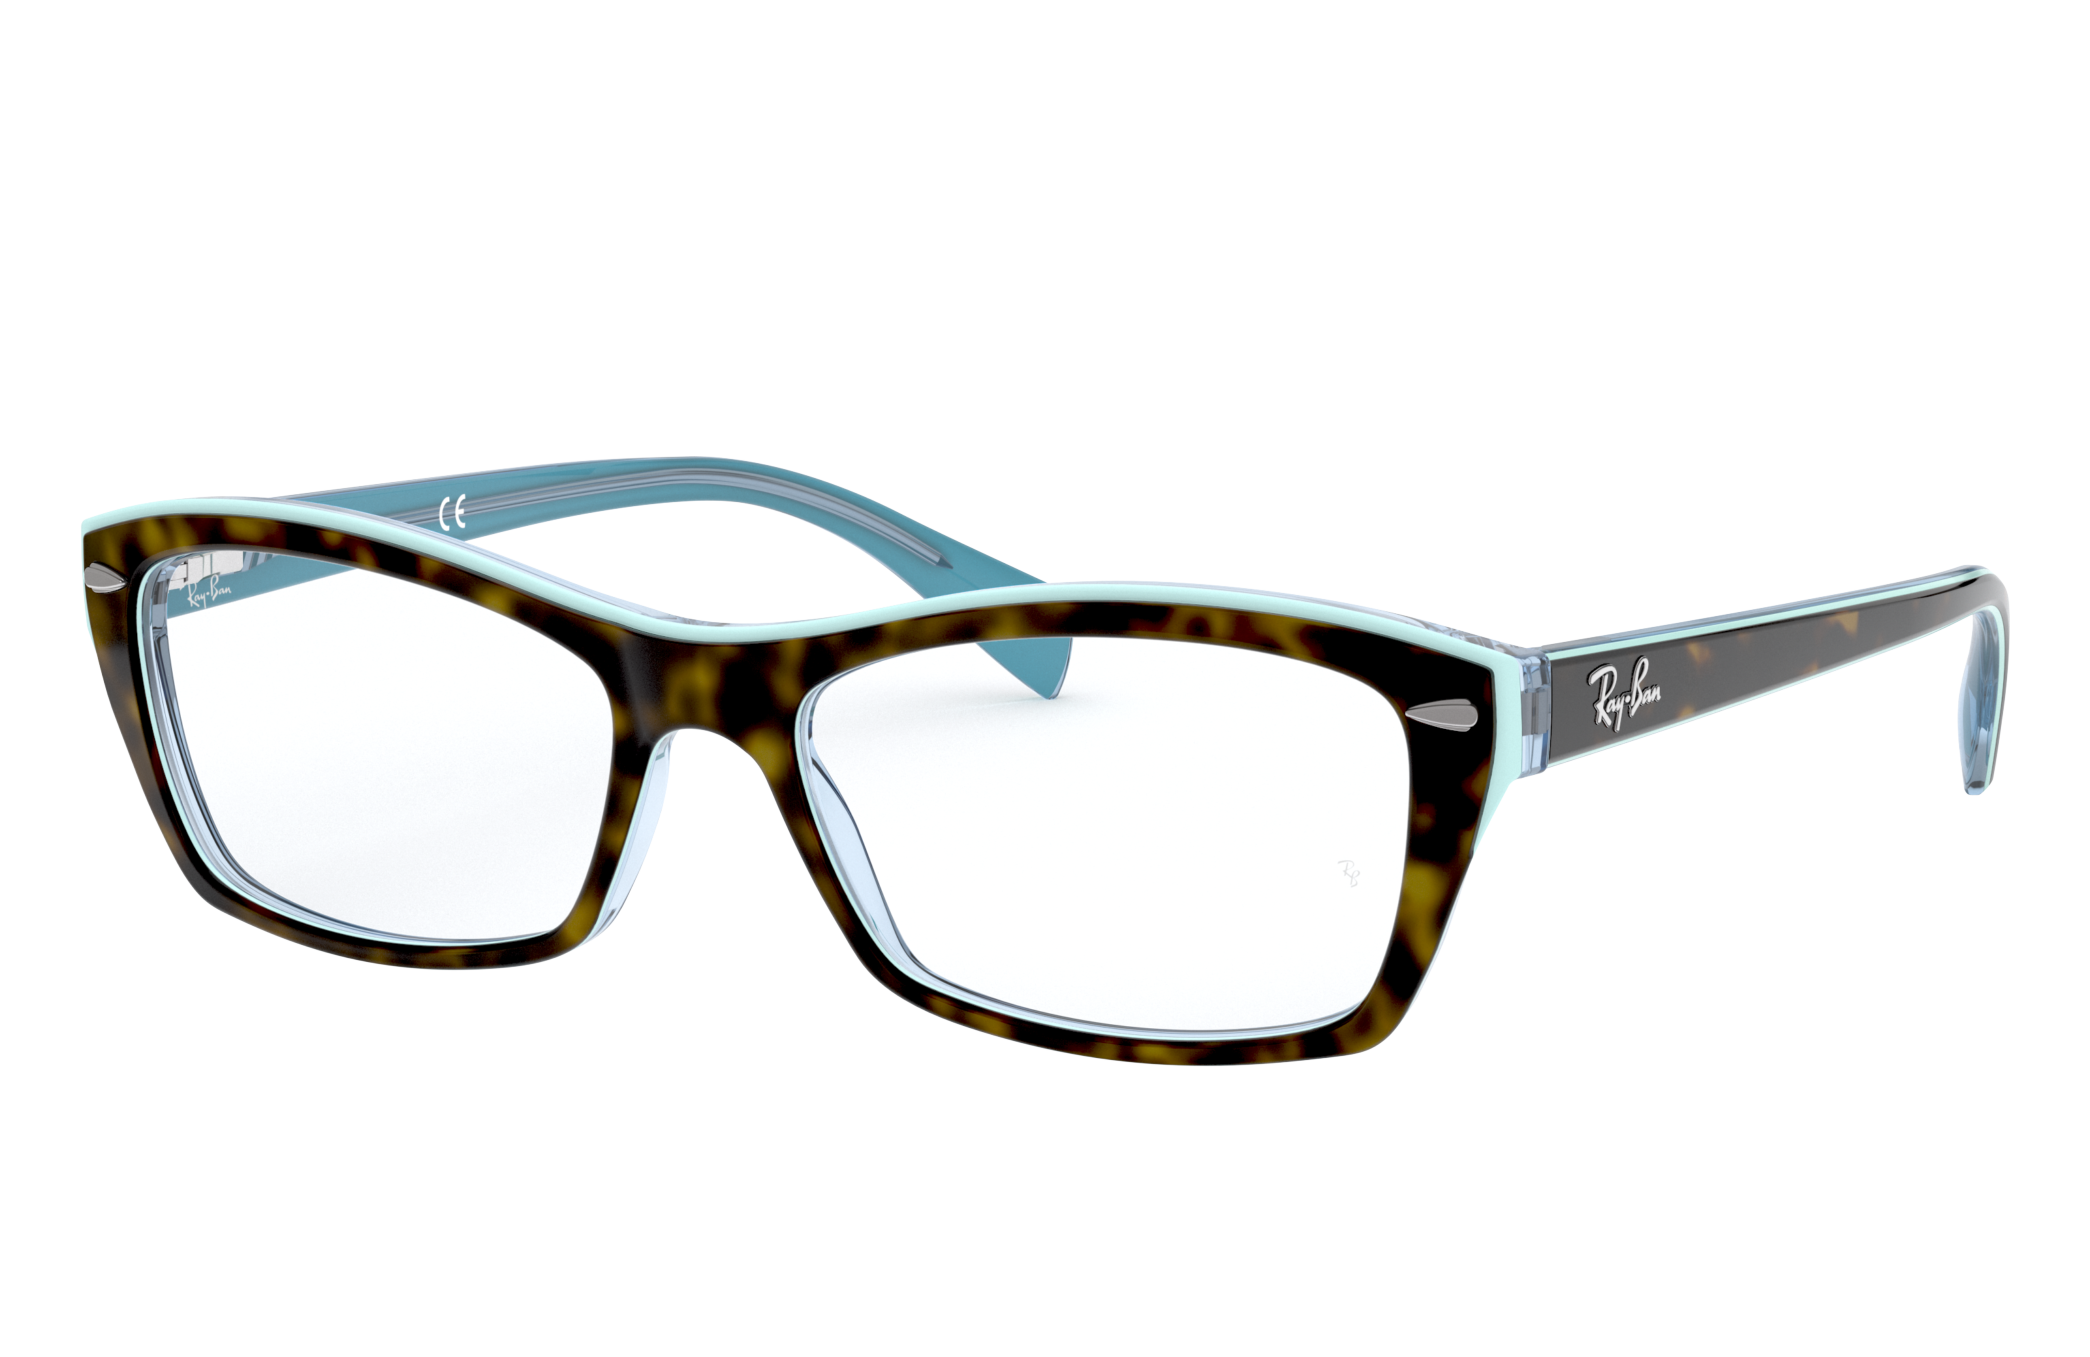 Rb5255 Optics Eyeglasses with Tortoise Frame | Ray-Ban®